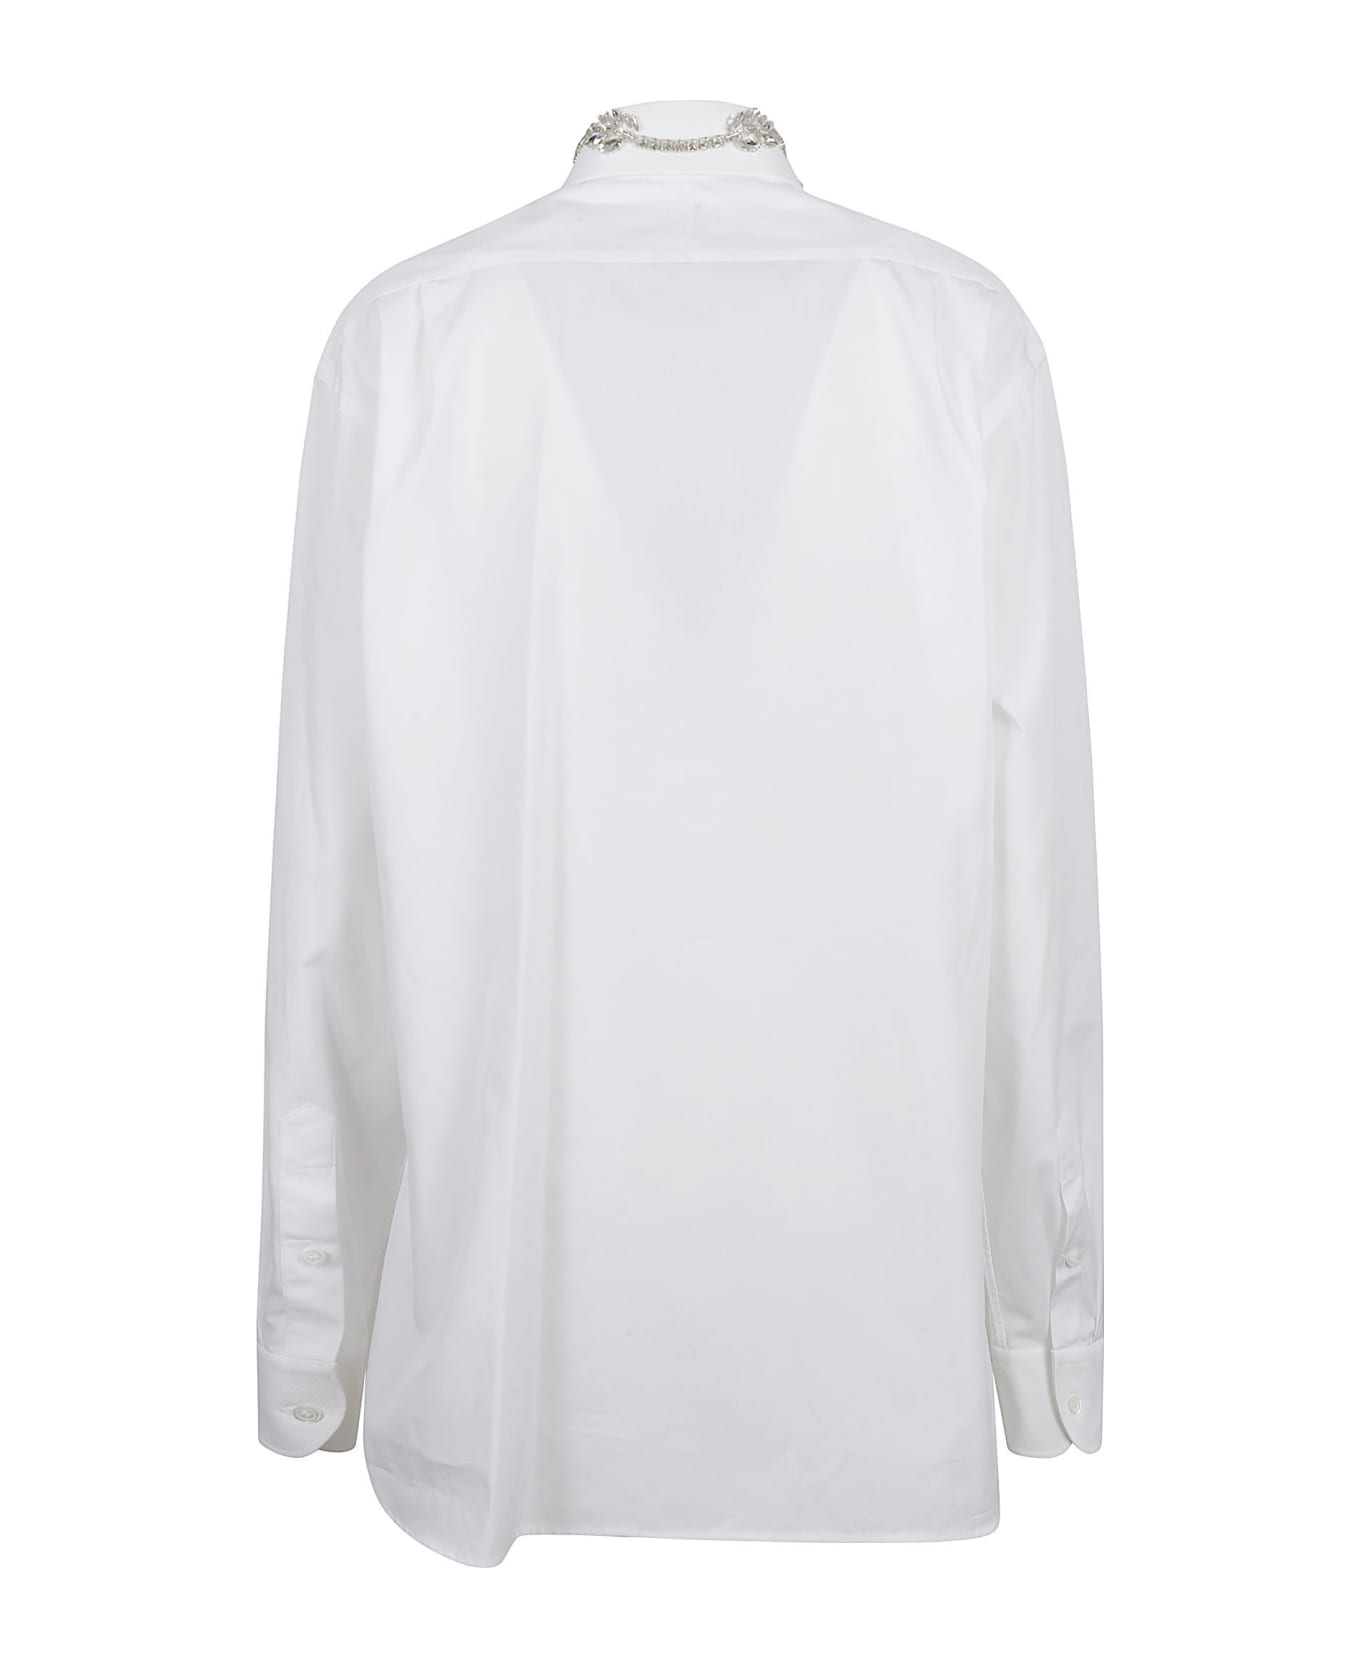 Burberry Featherstone Shirt - White